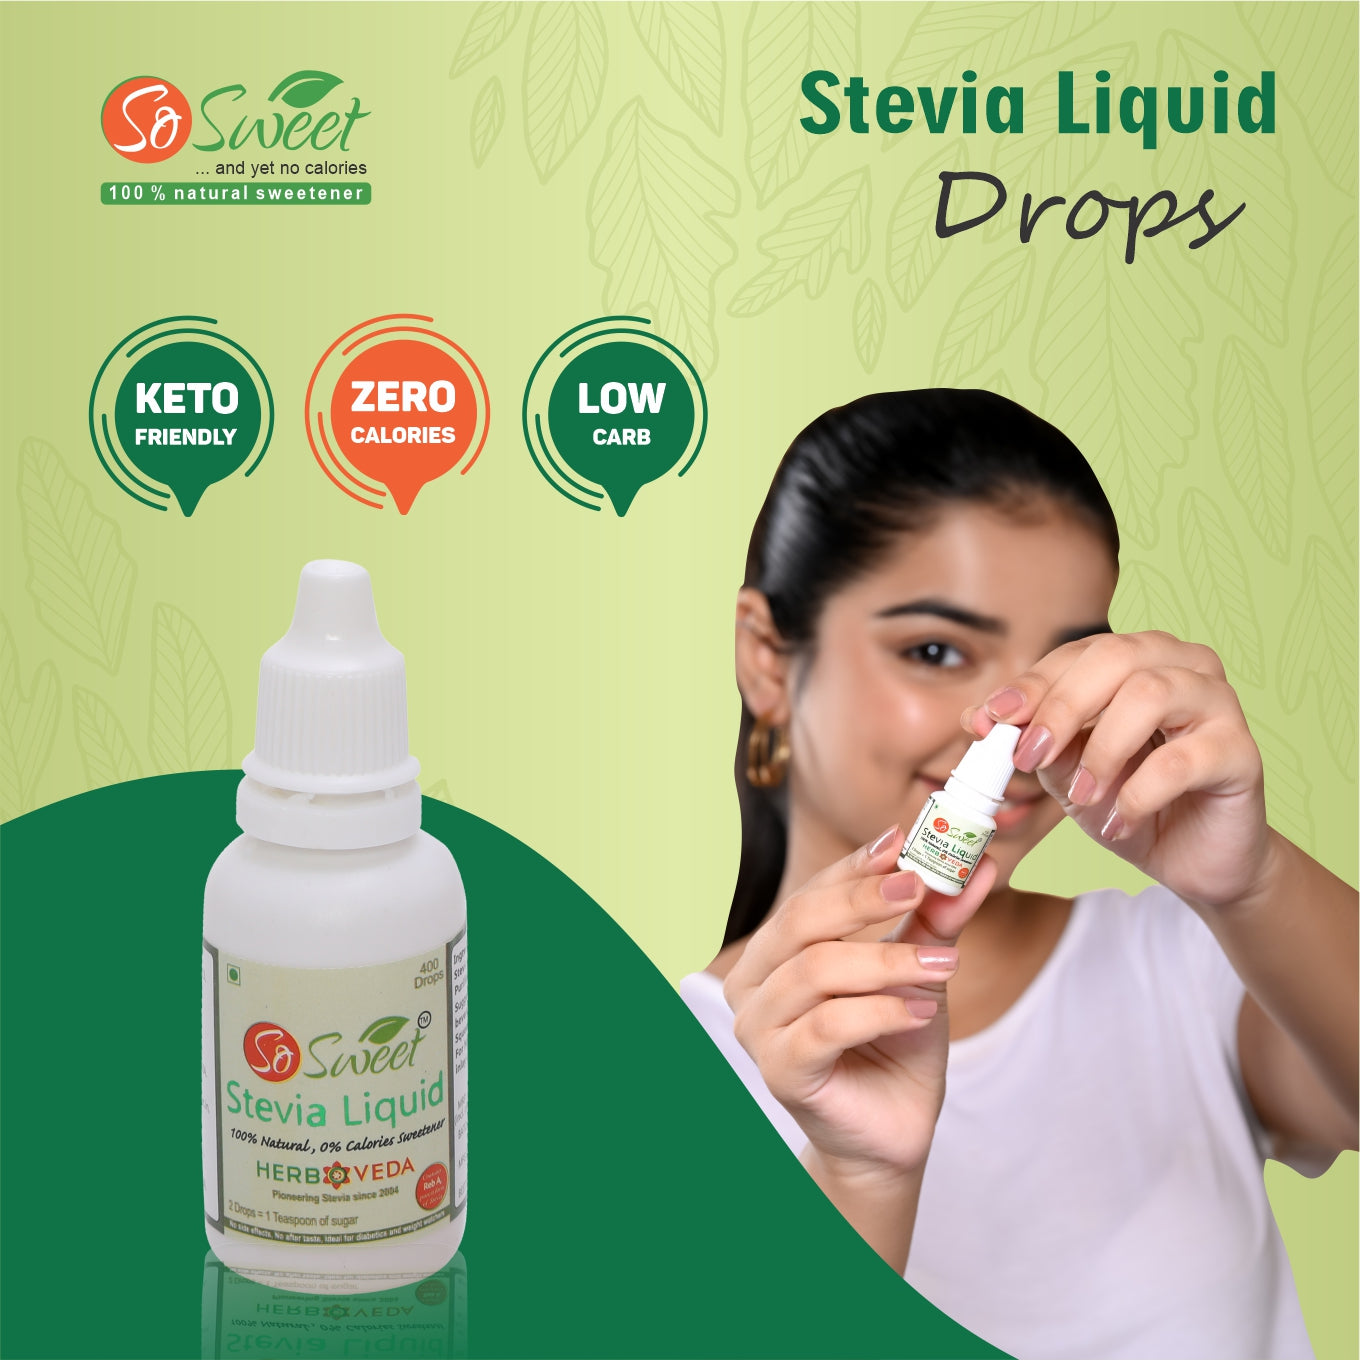 So Sweet Stevia Liquid Sugar Free 100 Drops - 5ml | Zero Calorie | Diabetic Friendly-Pack of 4